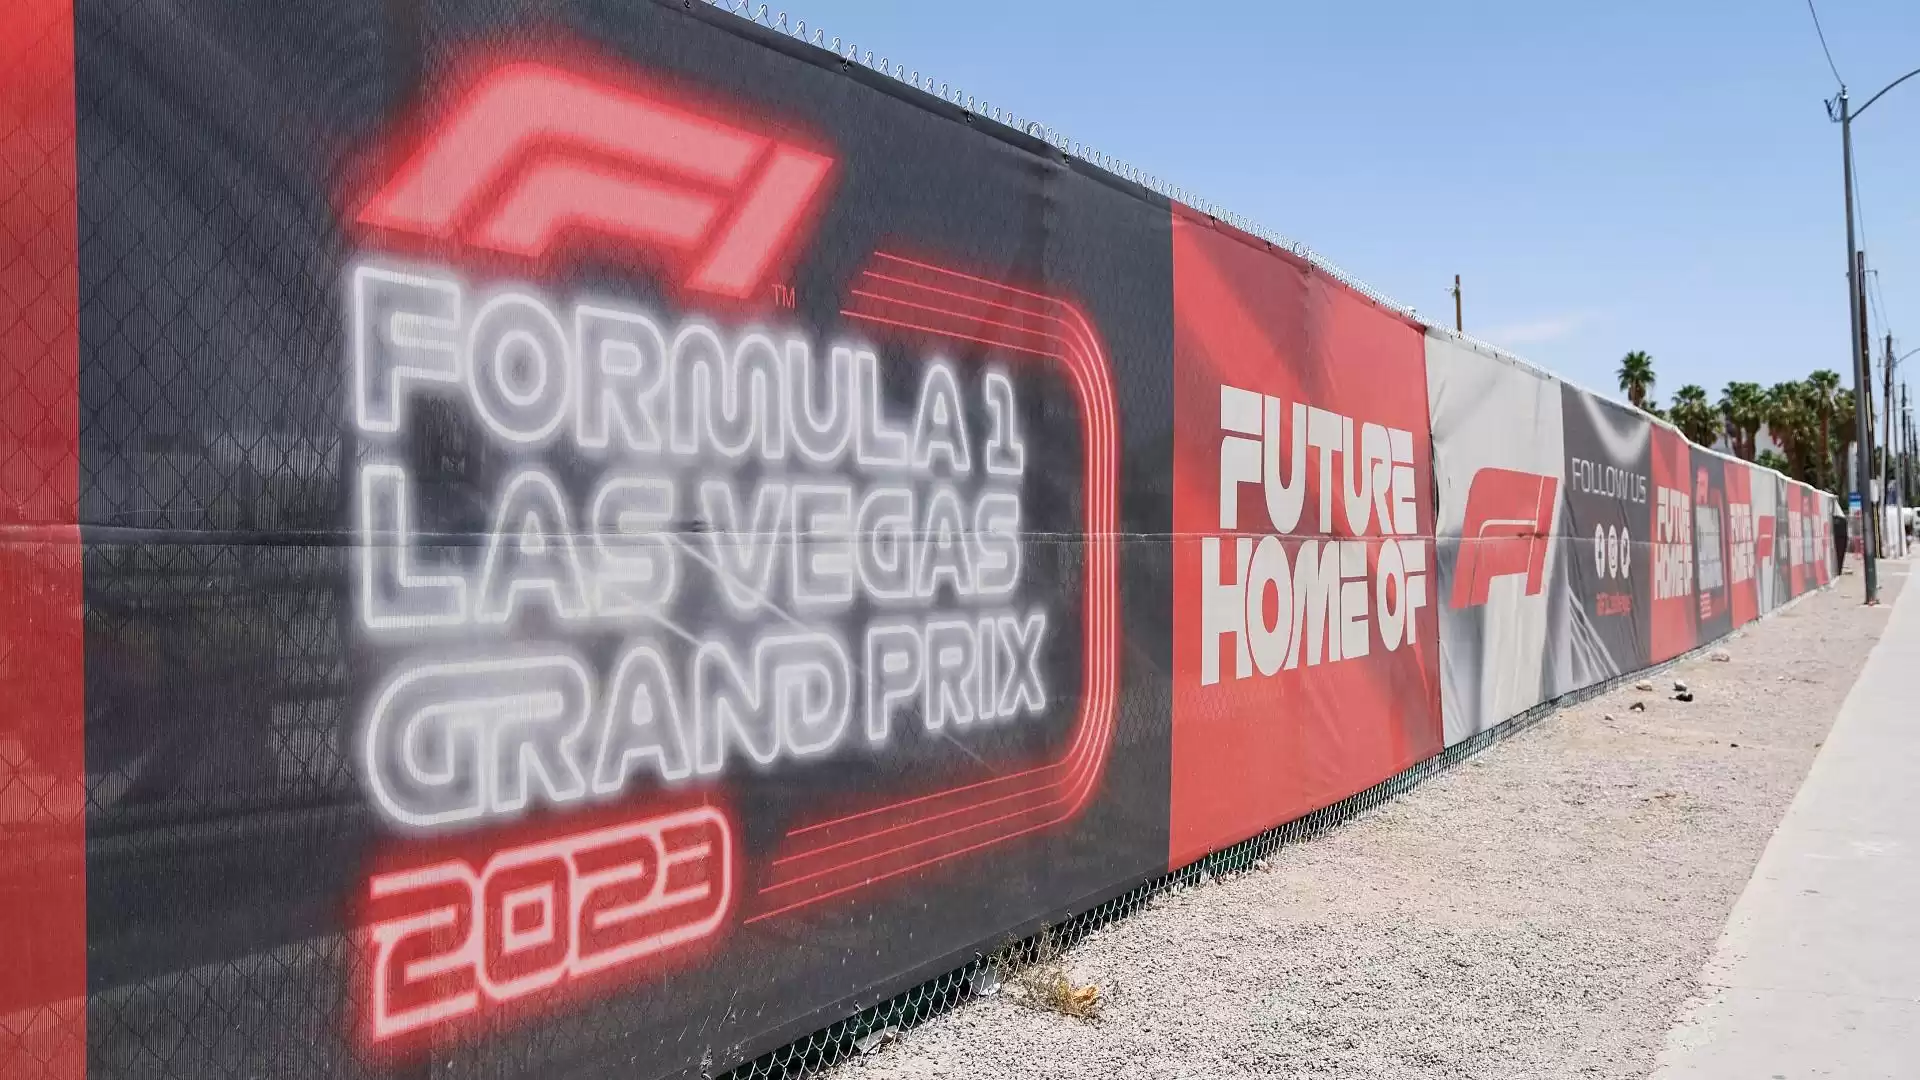 Gran Premio de Las Vegas de F1: inicio tardío, FP1 cancelada, problemas en la pista: todo mal